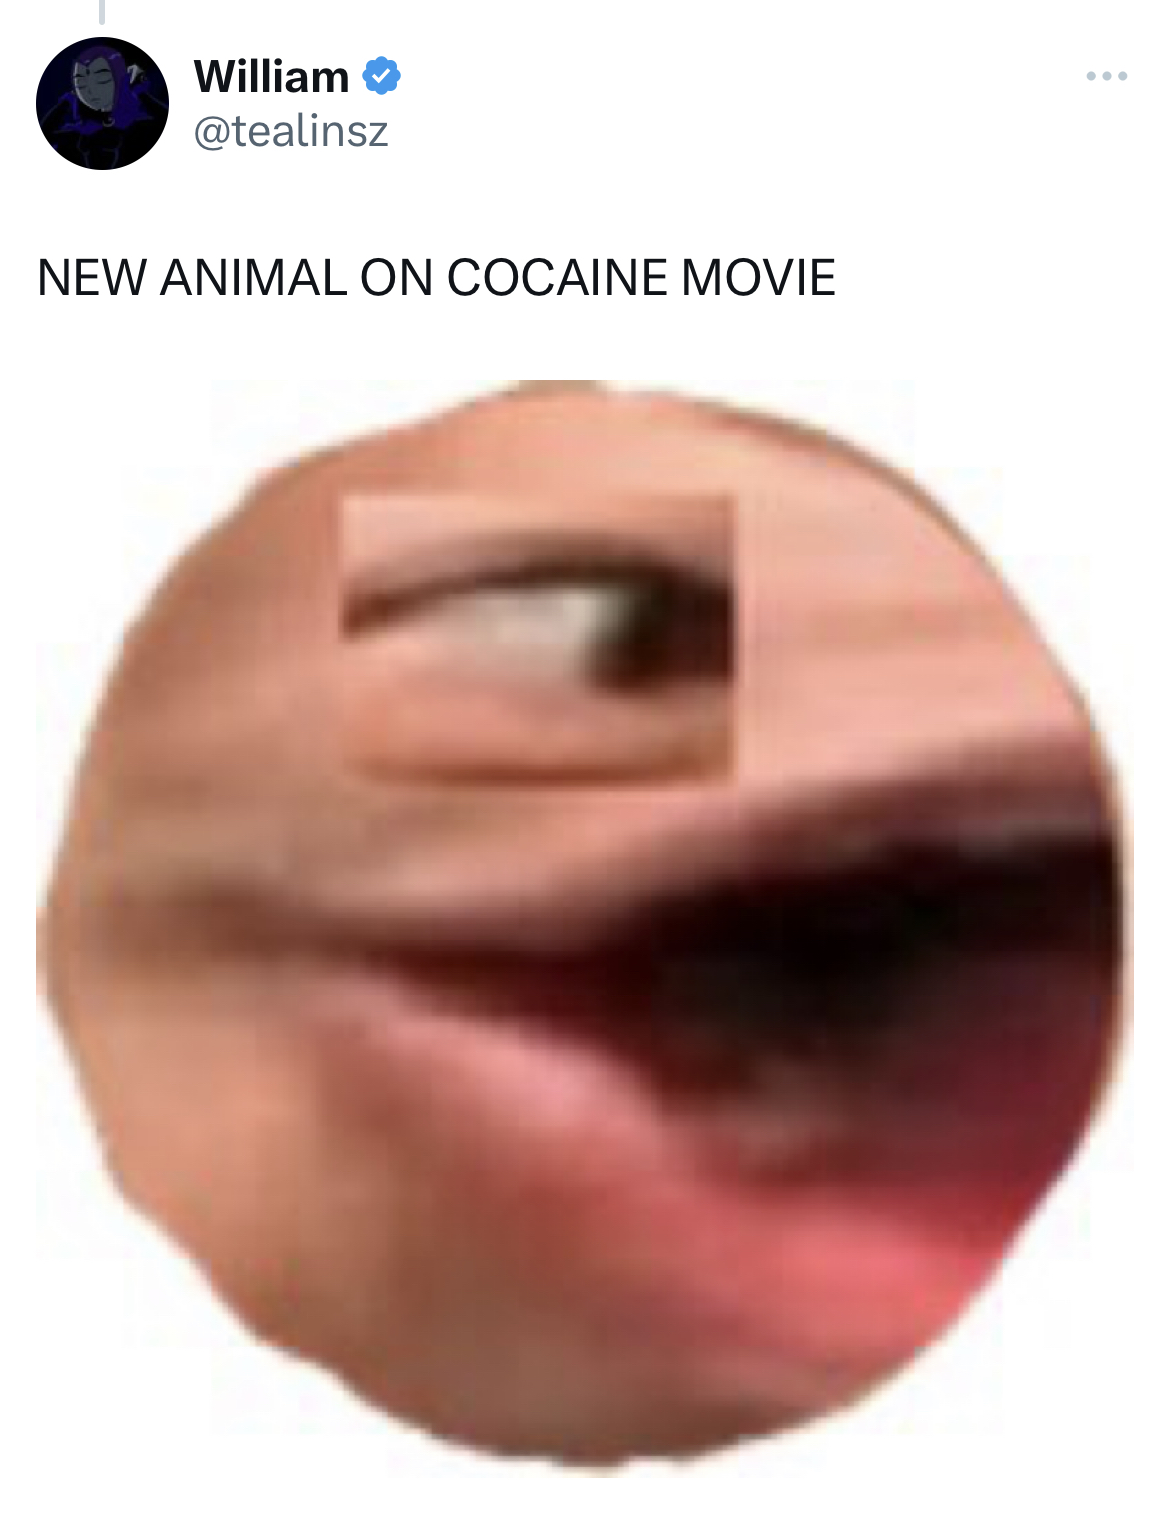 Ohio Cocaine Cat memes - pagman - William New Animal On Cocaine Movie